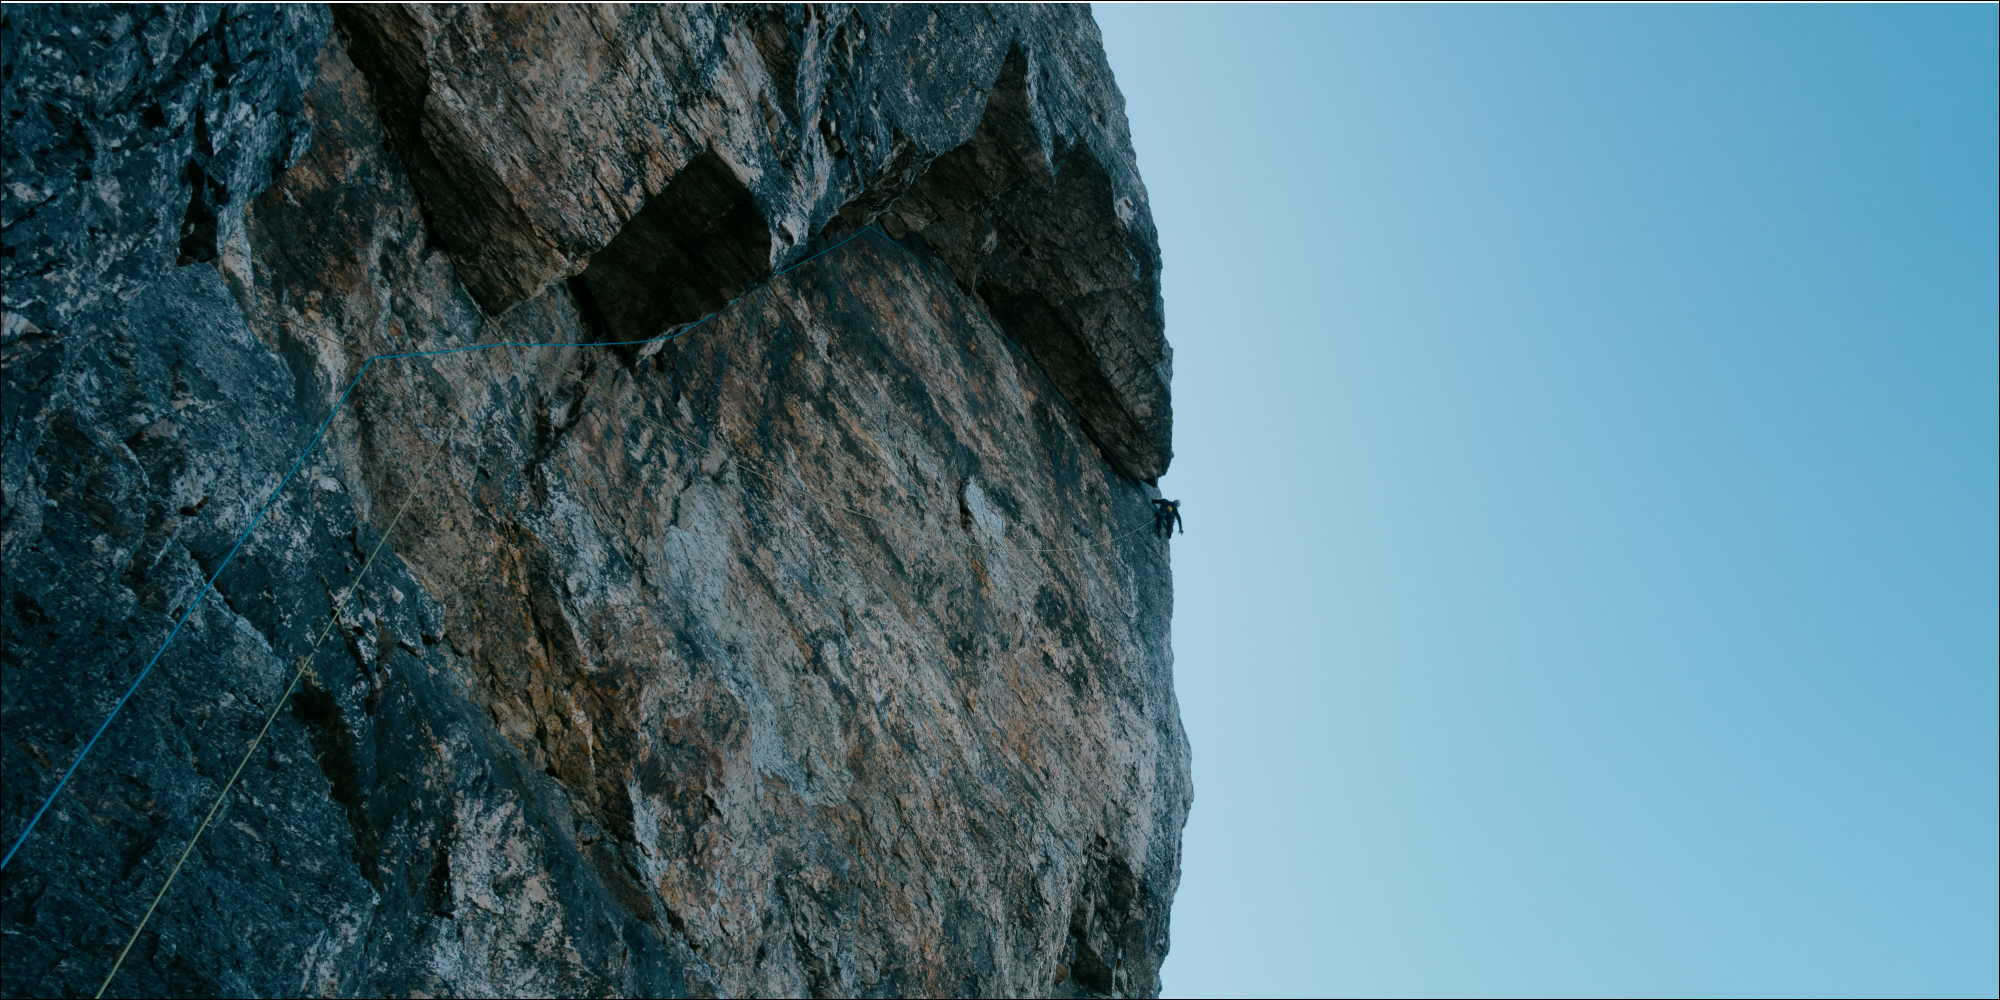 How to Get Better at Rock Climbing - Climbing